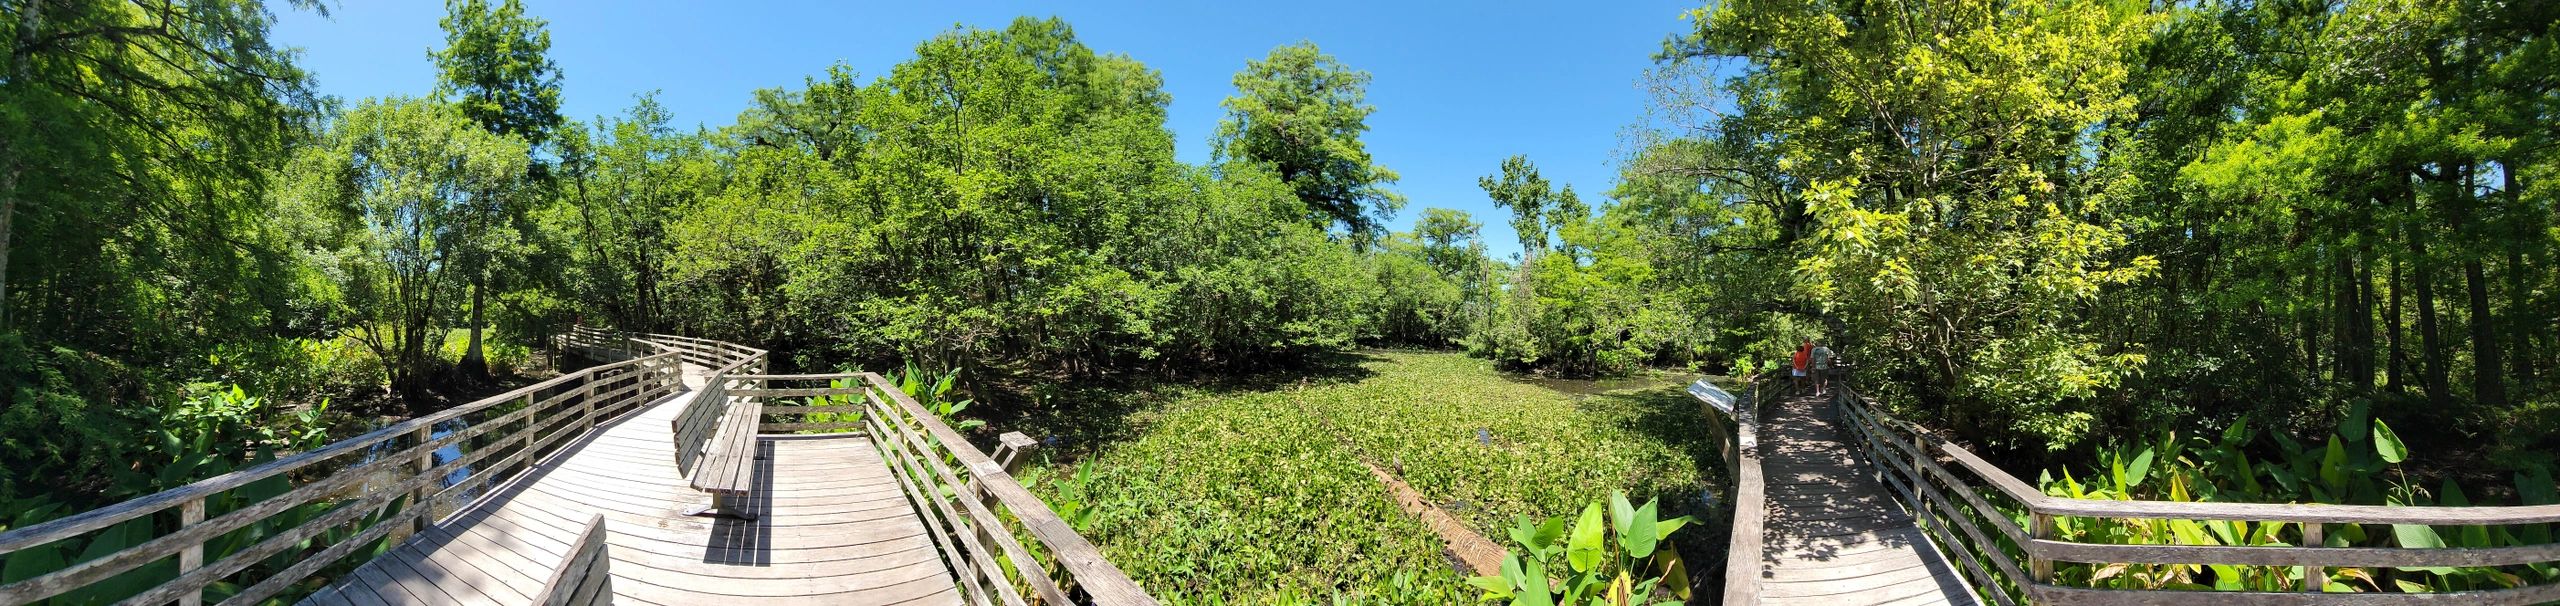 Audubon Corkscrew Swamp, North Lettuce Lake, Naples, Florida - Panorama Photo